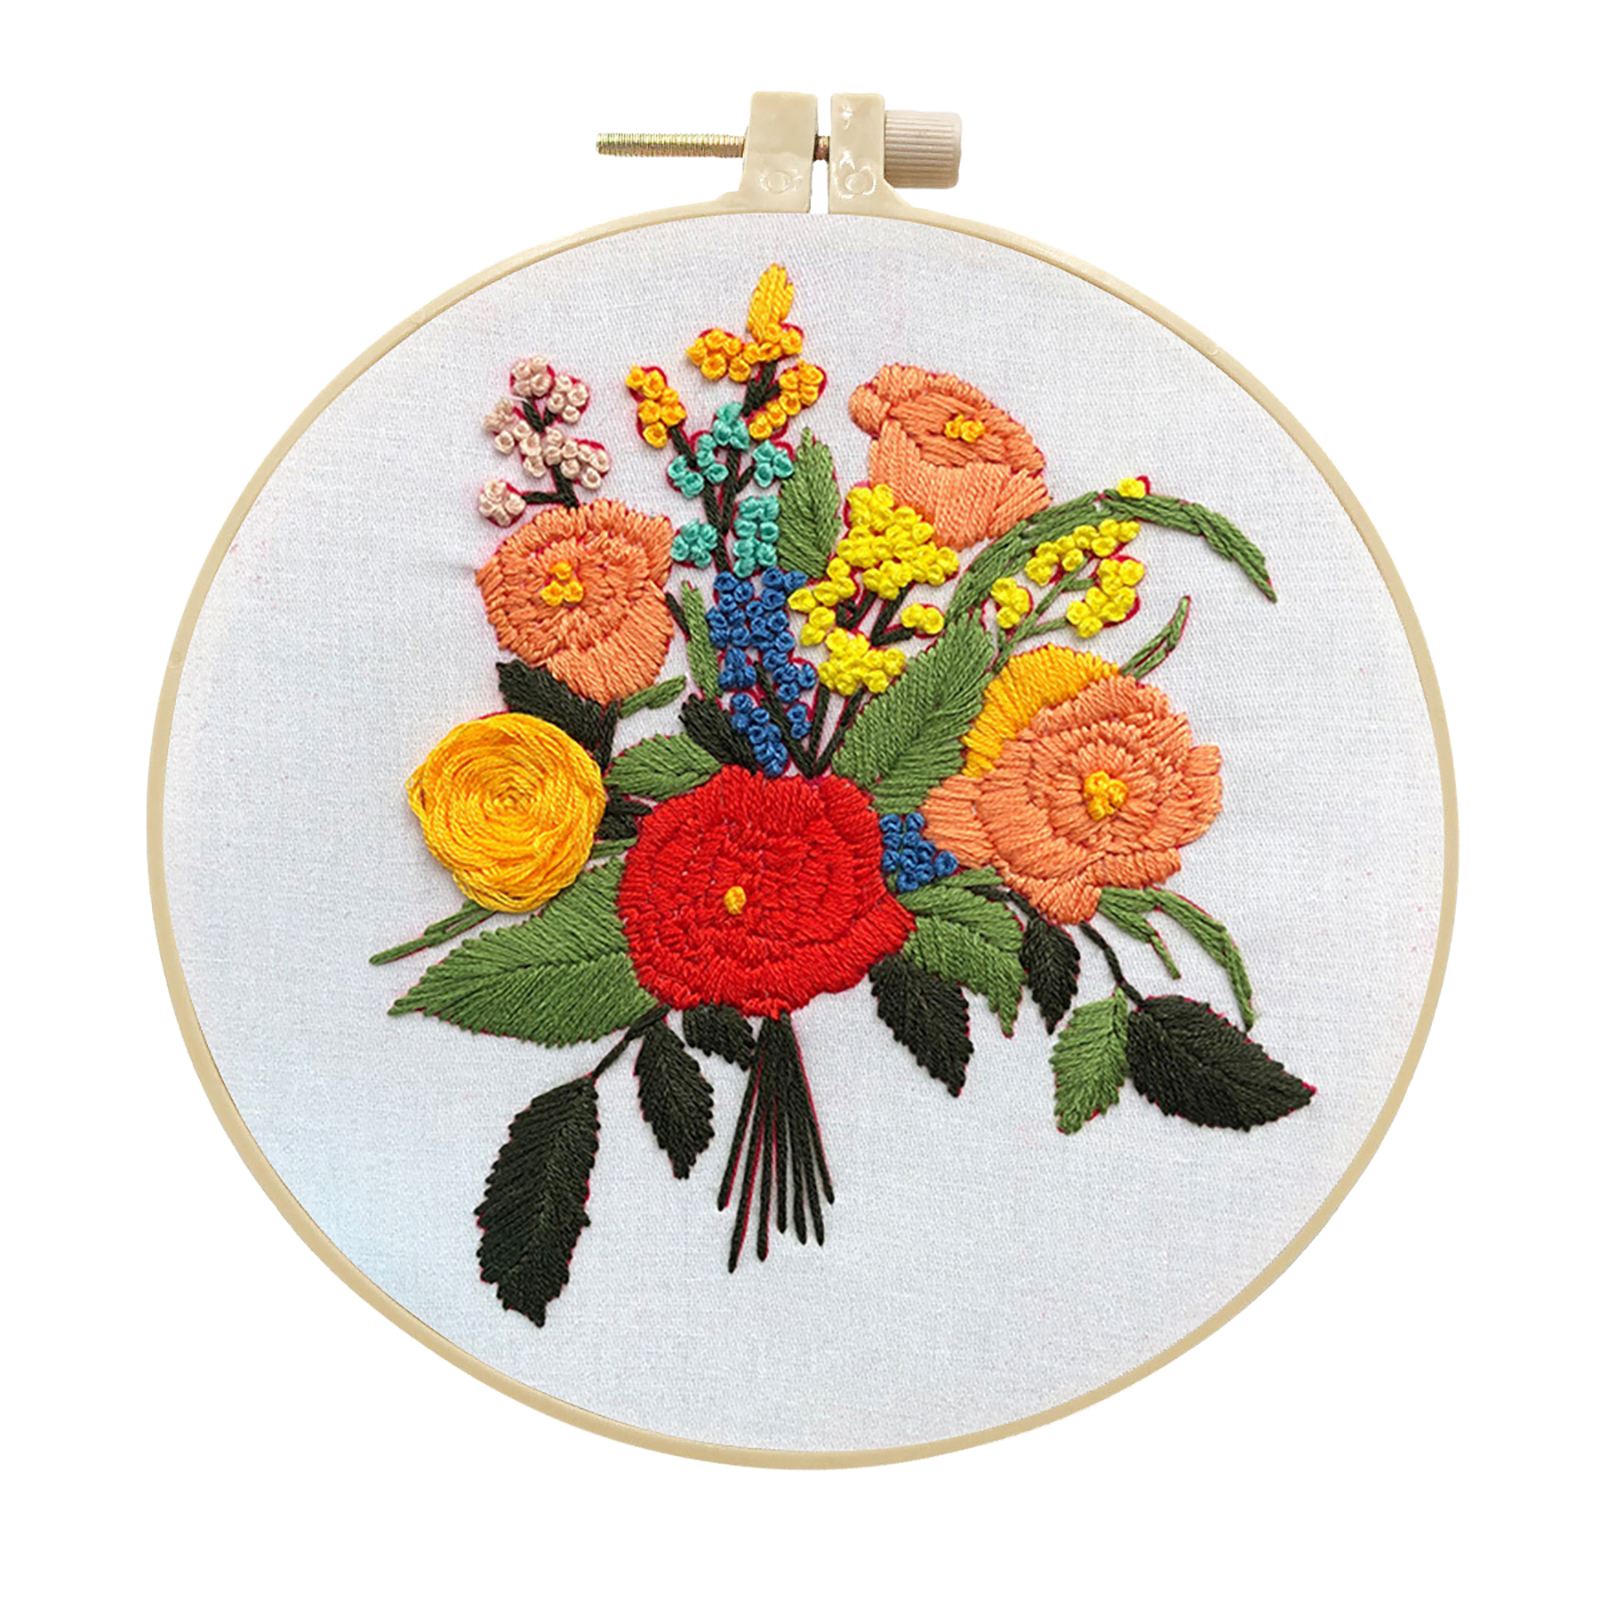 Handmade Embroidery Kit Cross stitch kit for Adult Beginner - Van Gogh Bouquet Pattern